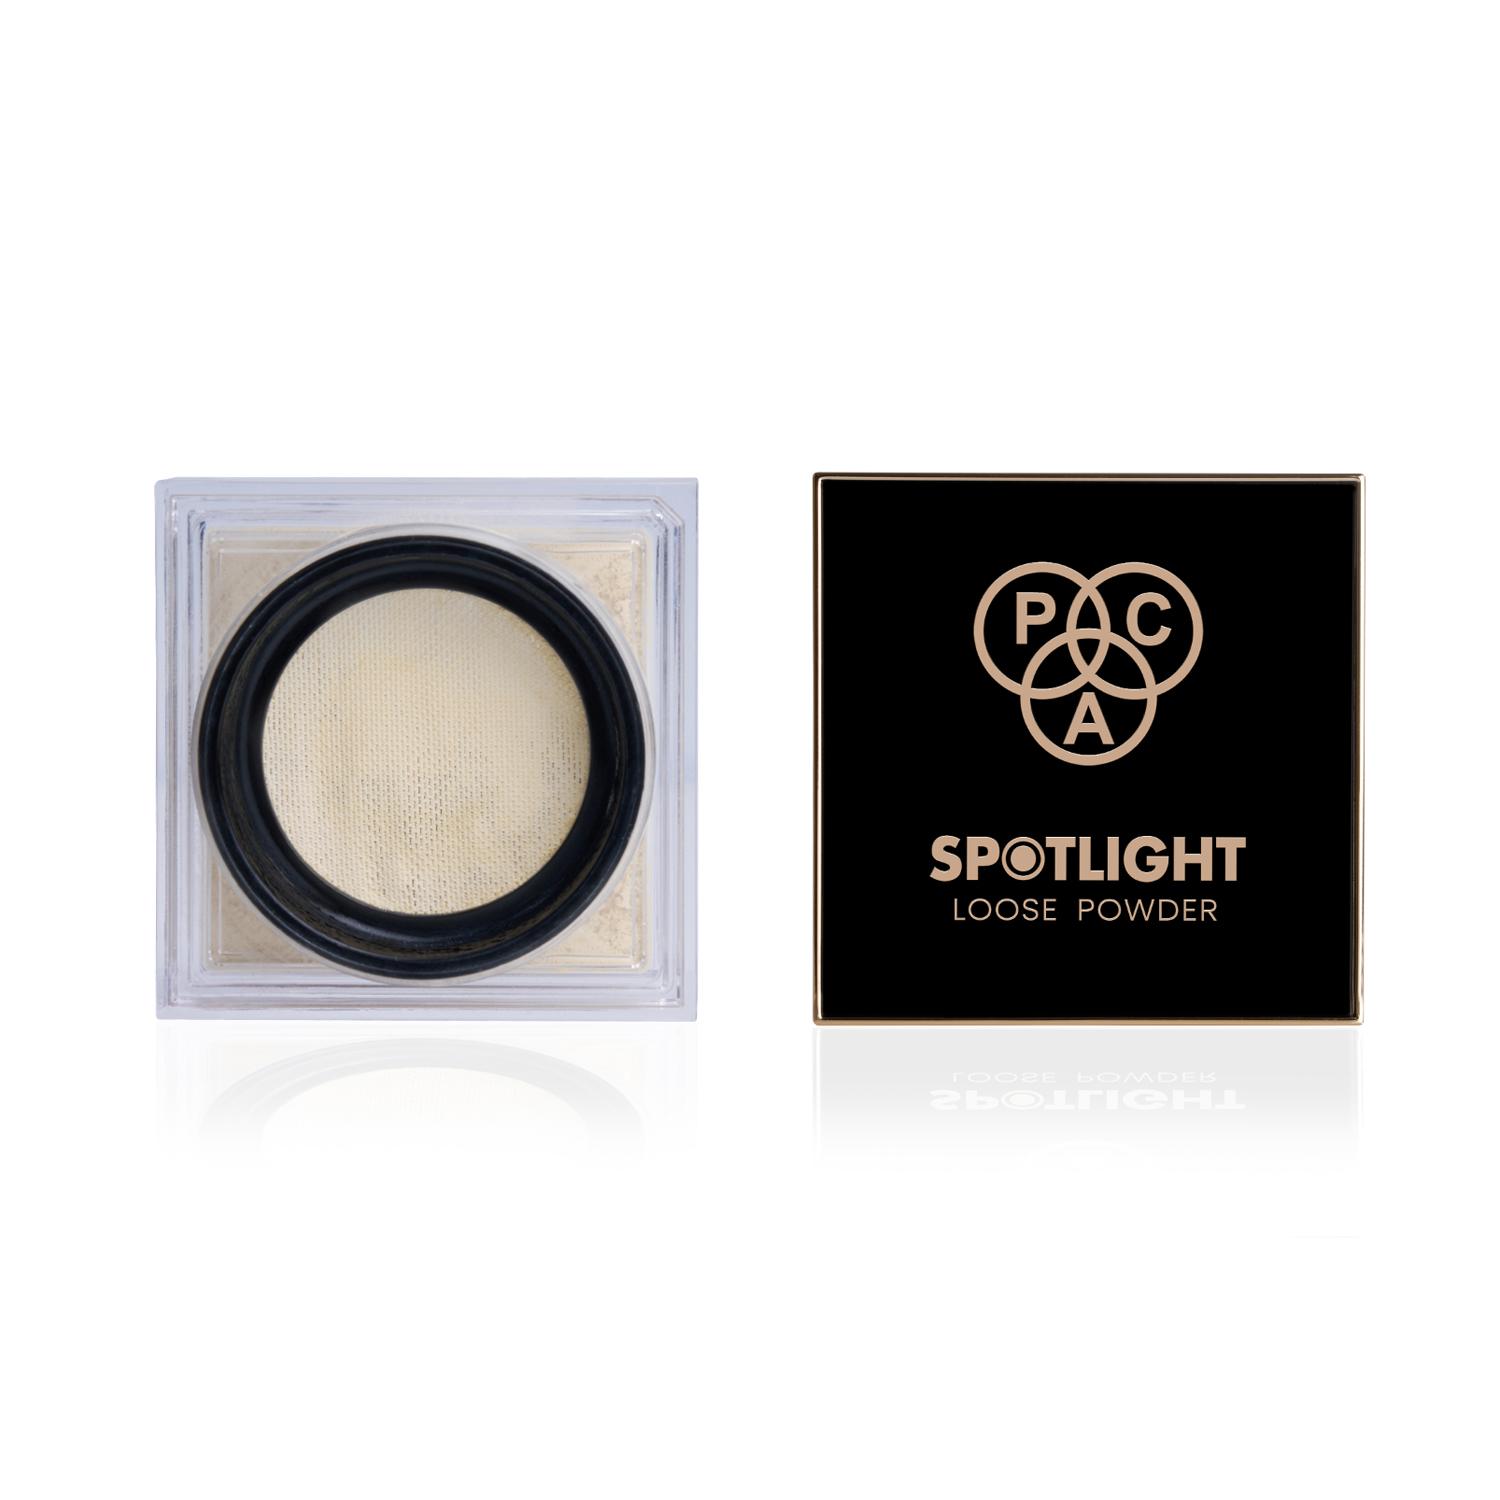 PAC | PAC Spotlight Loose Powder - Translucent (9g)